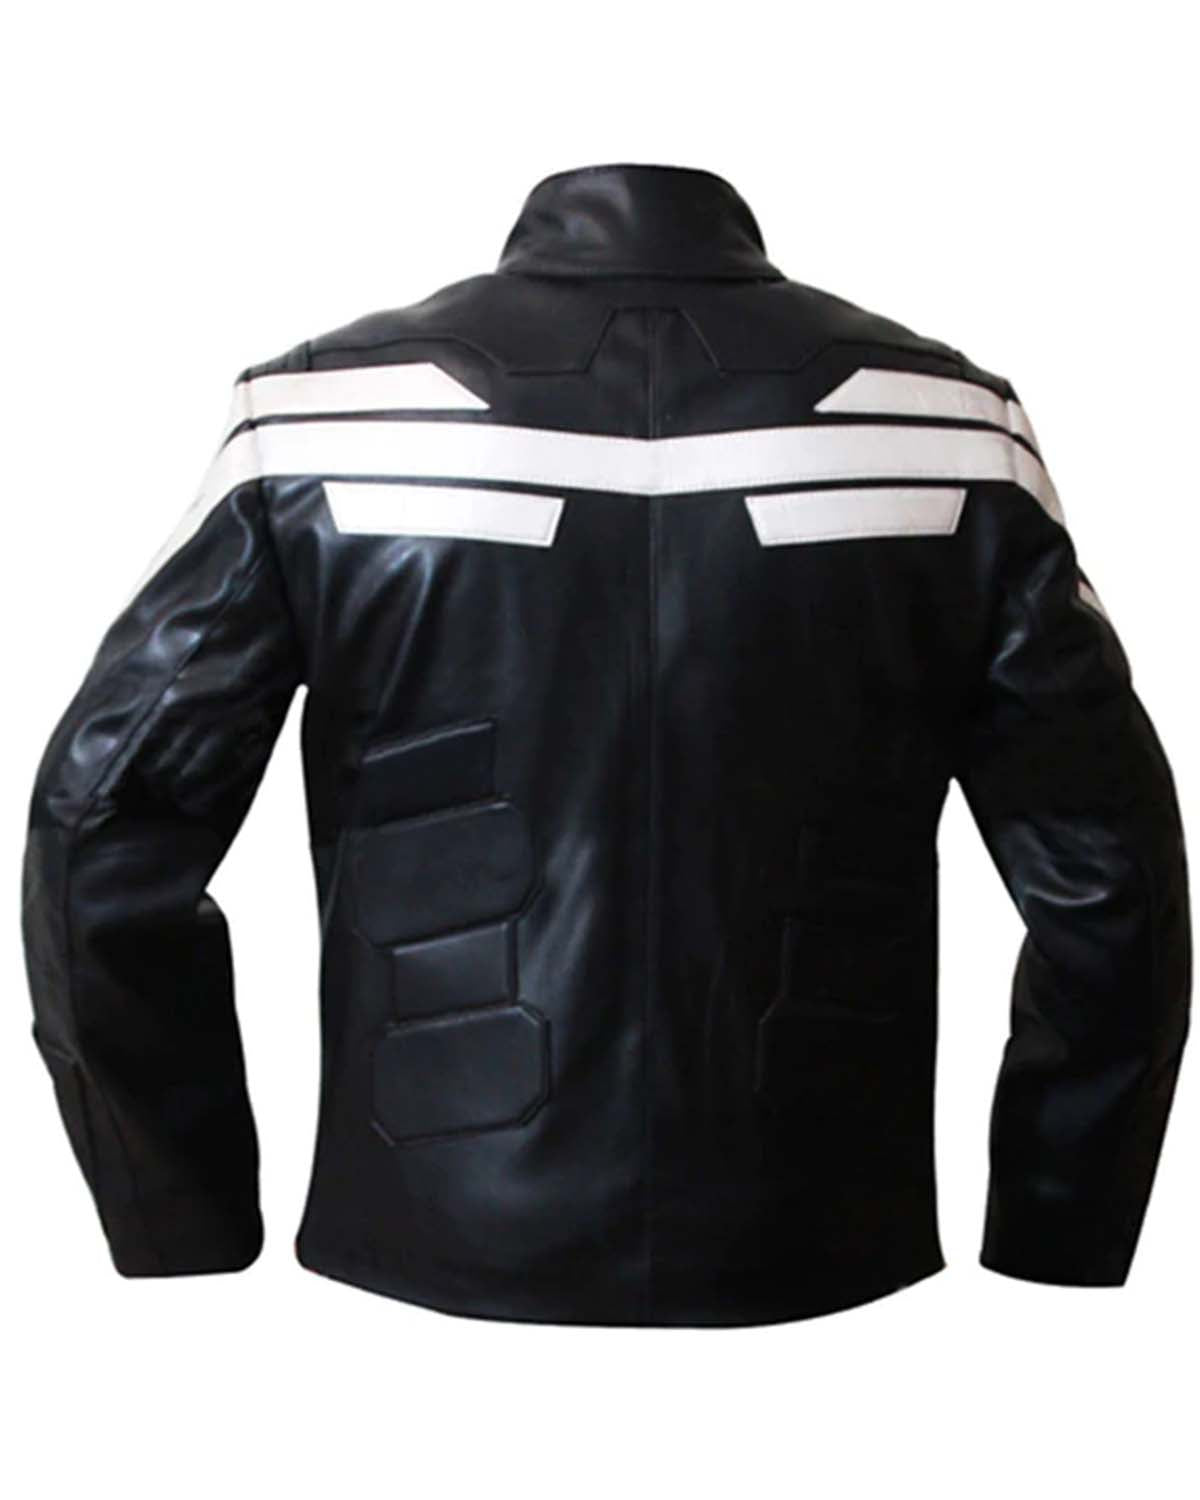 Captain America Winters Leather Black Suit Jacket